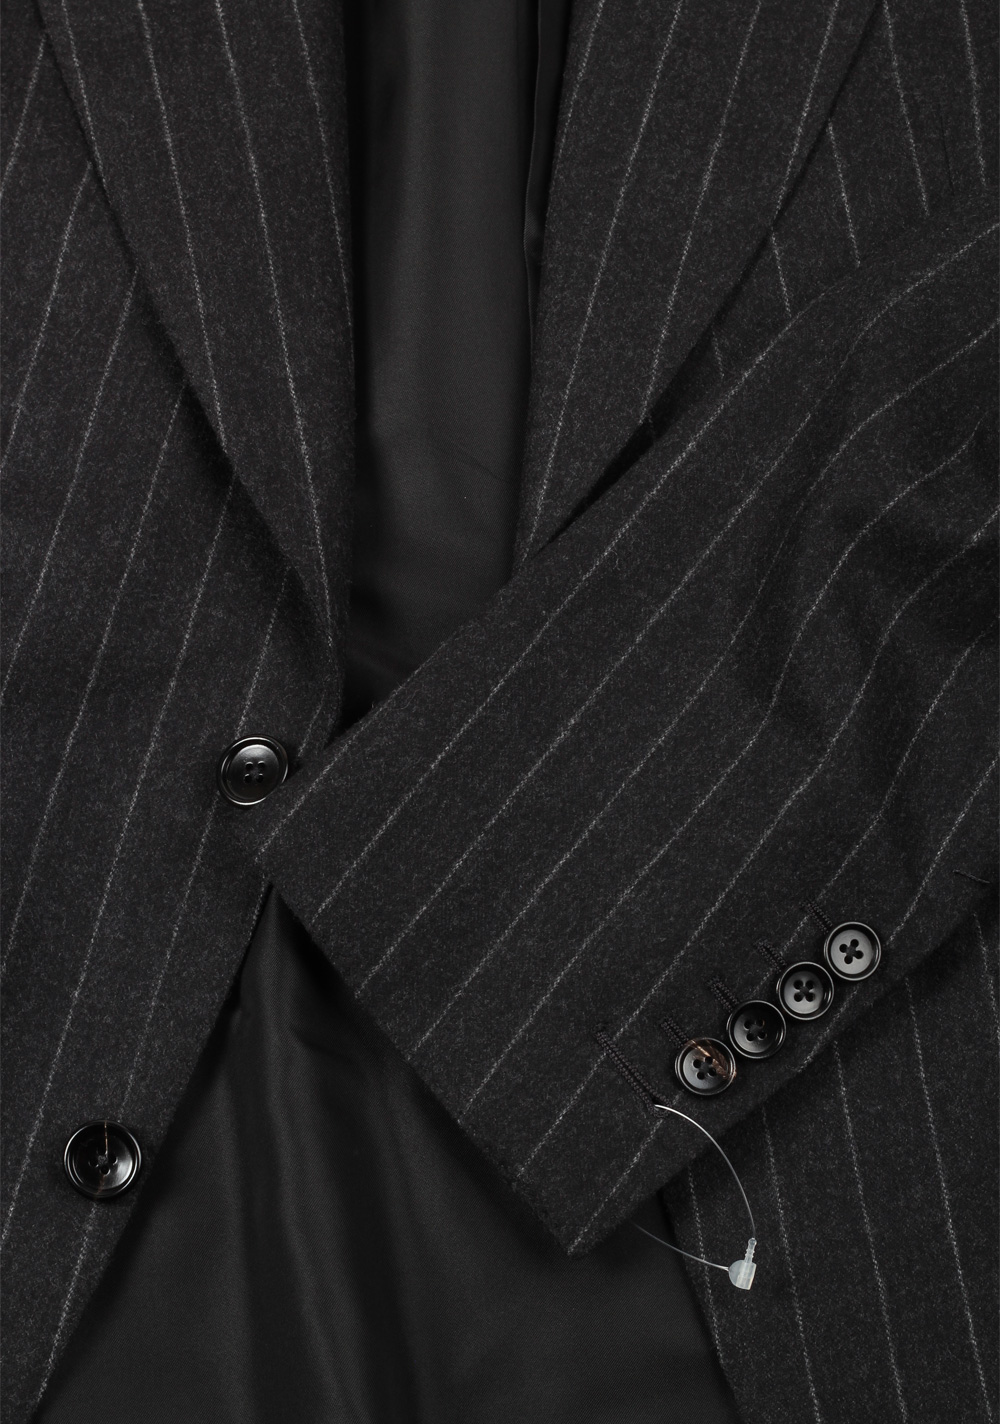 TOM FORD Atticus Gray Striped Flannel Suit Size 46 / 36R U.S. | Costume Limité